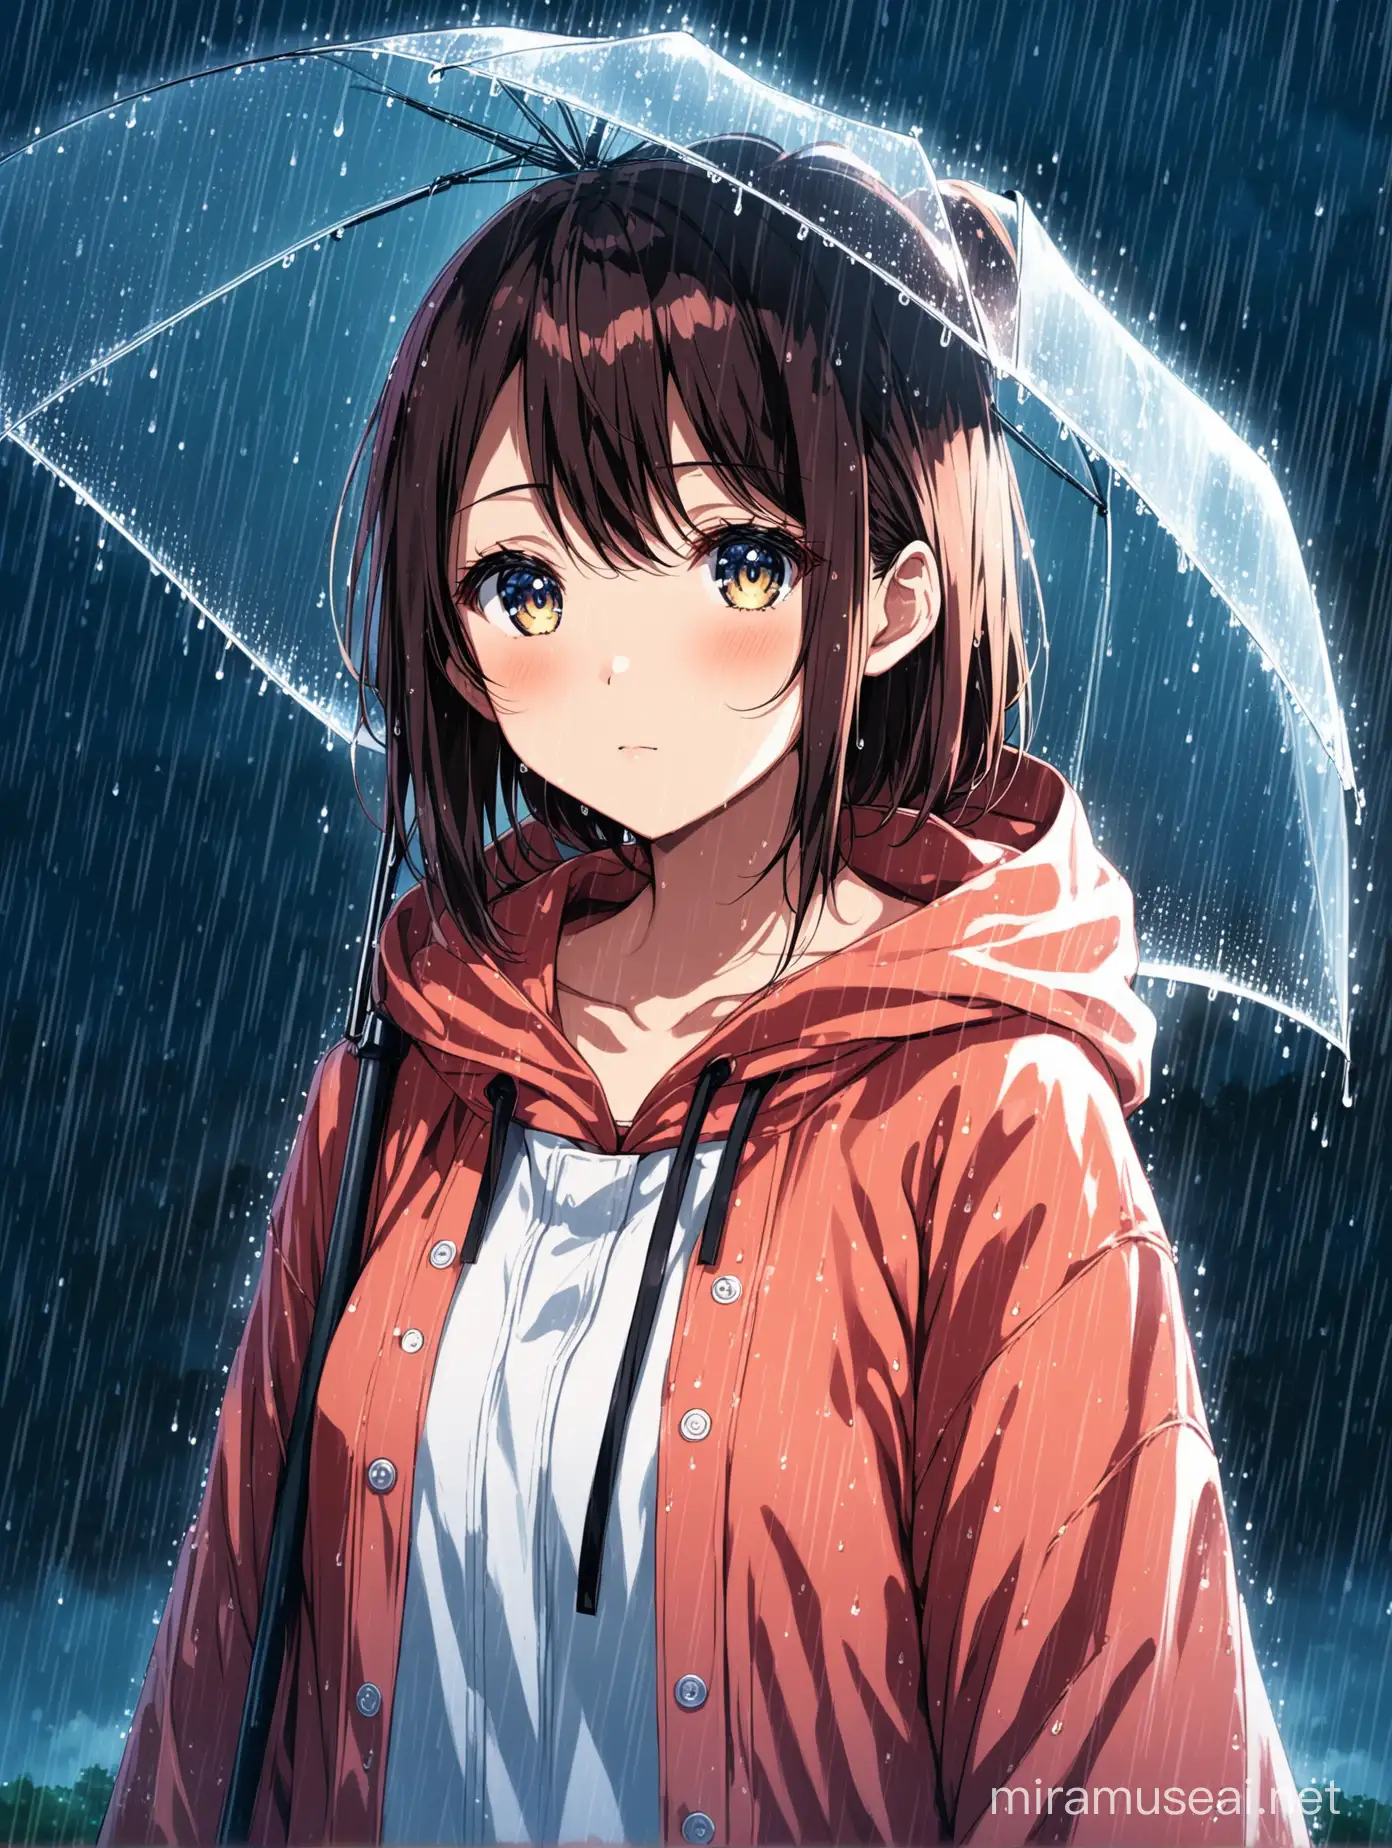 anime girl with rainy background, 